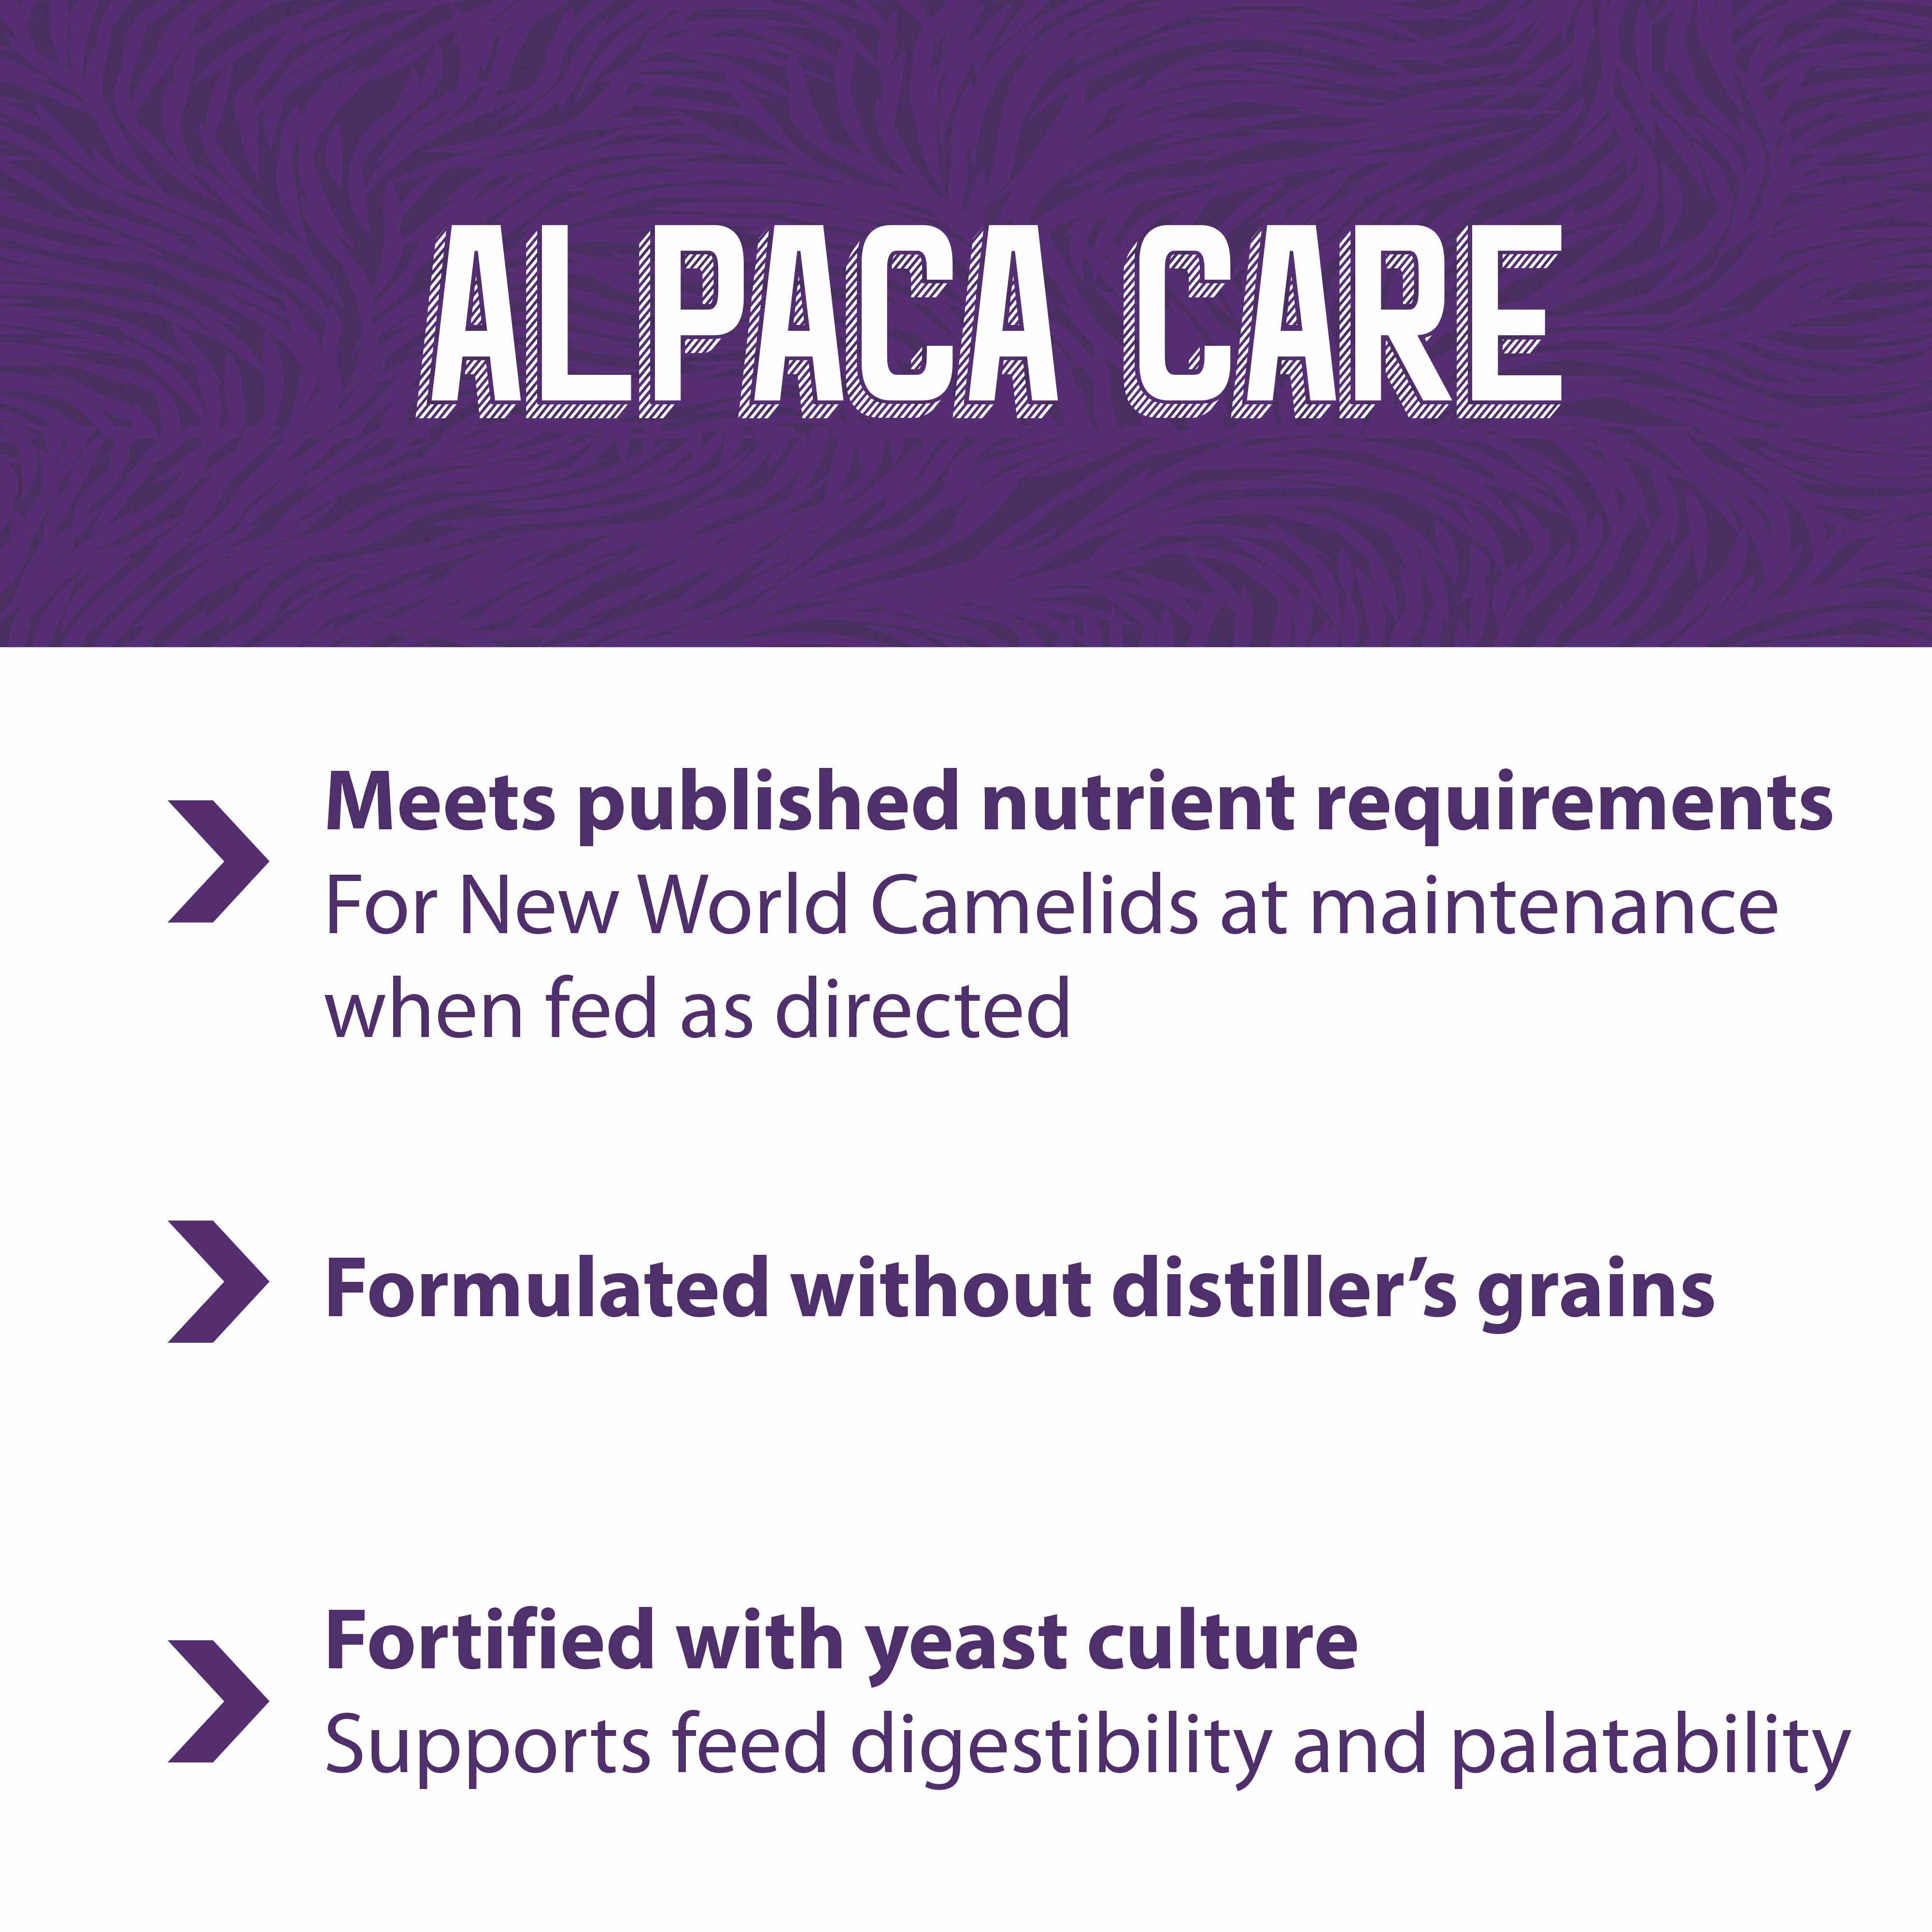 Alpaca Care meets nutrient requirements